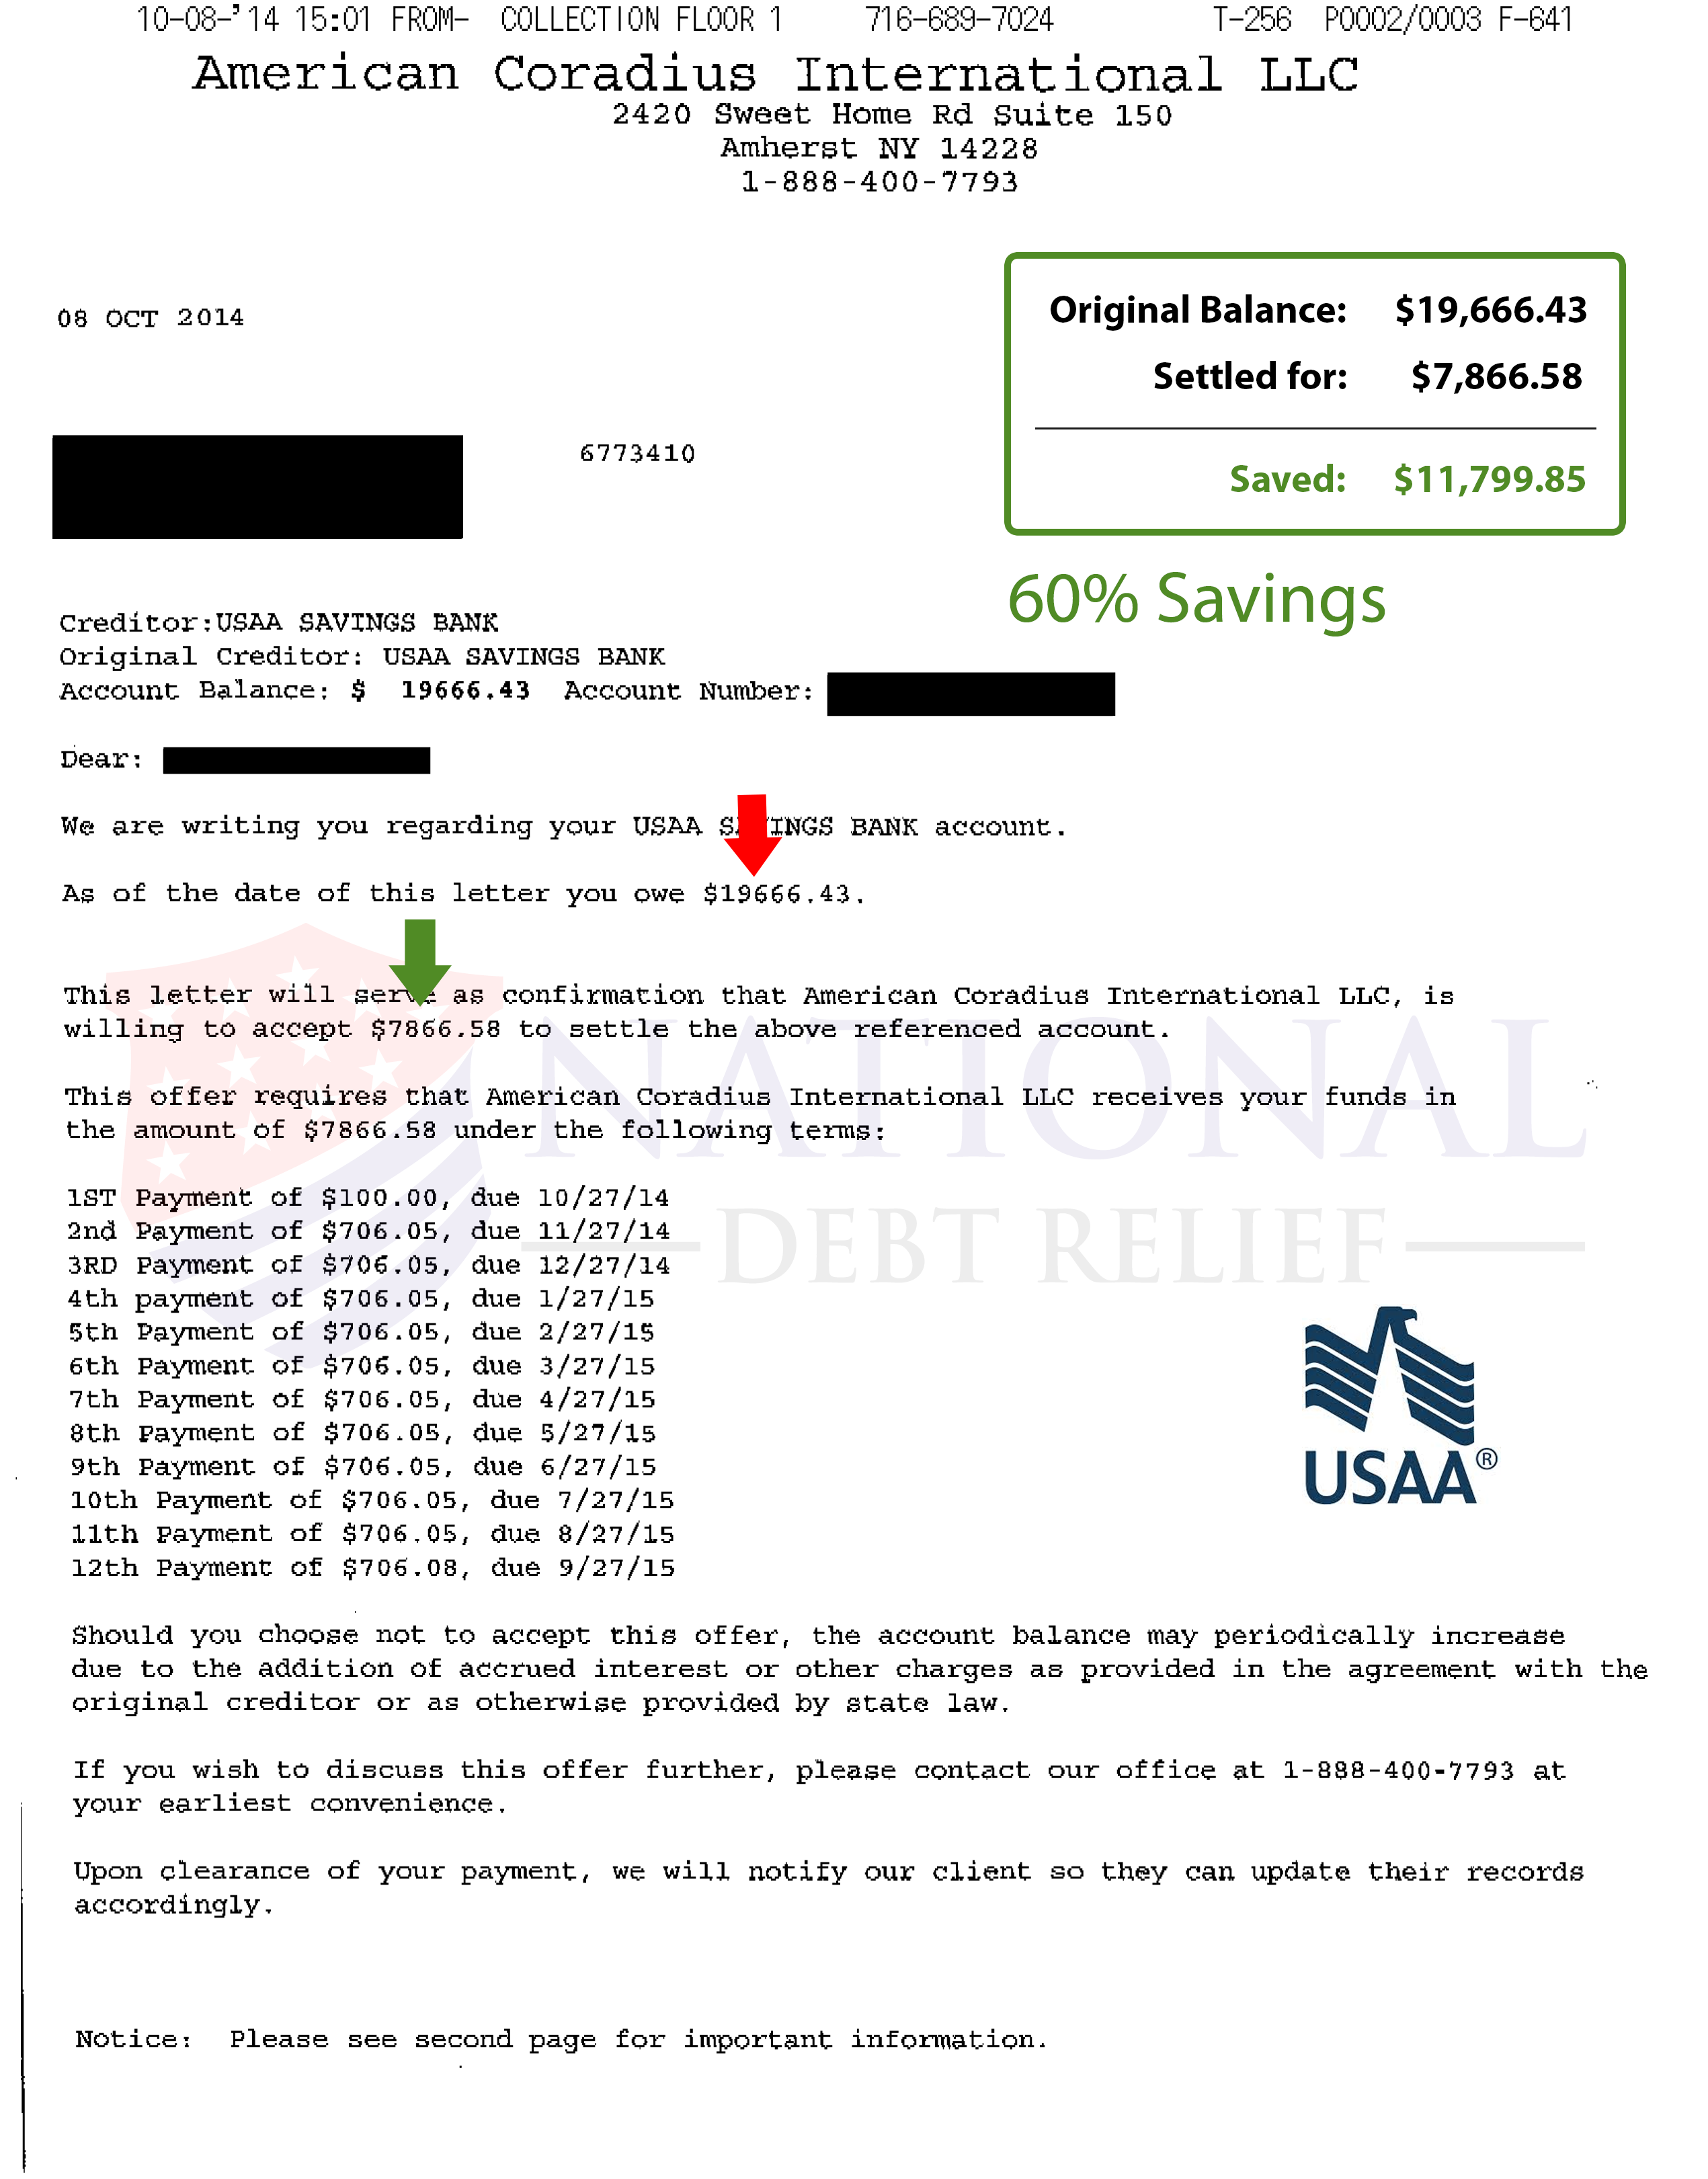 Debt Forgiveness Letter Sample from www.nationaldebtrelief.com